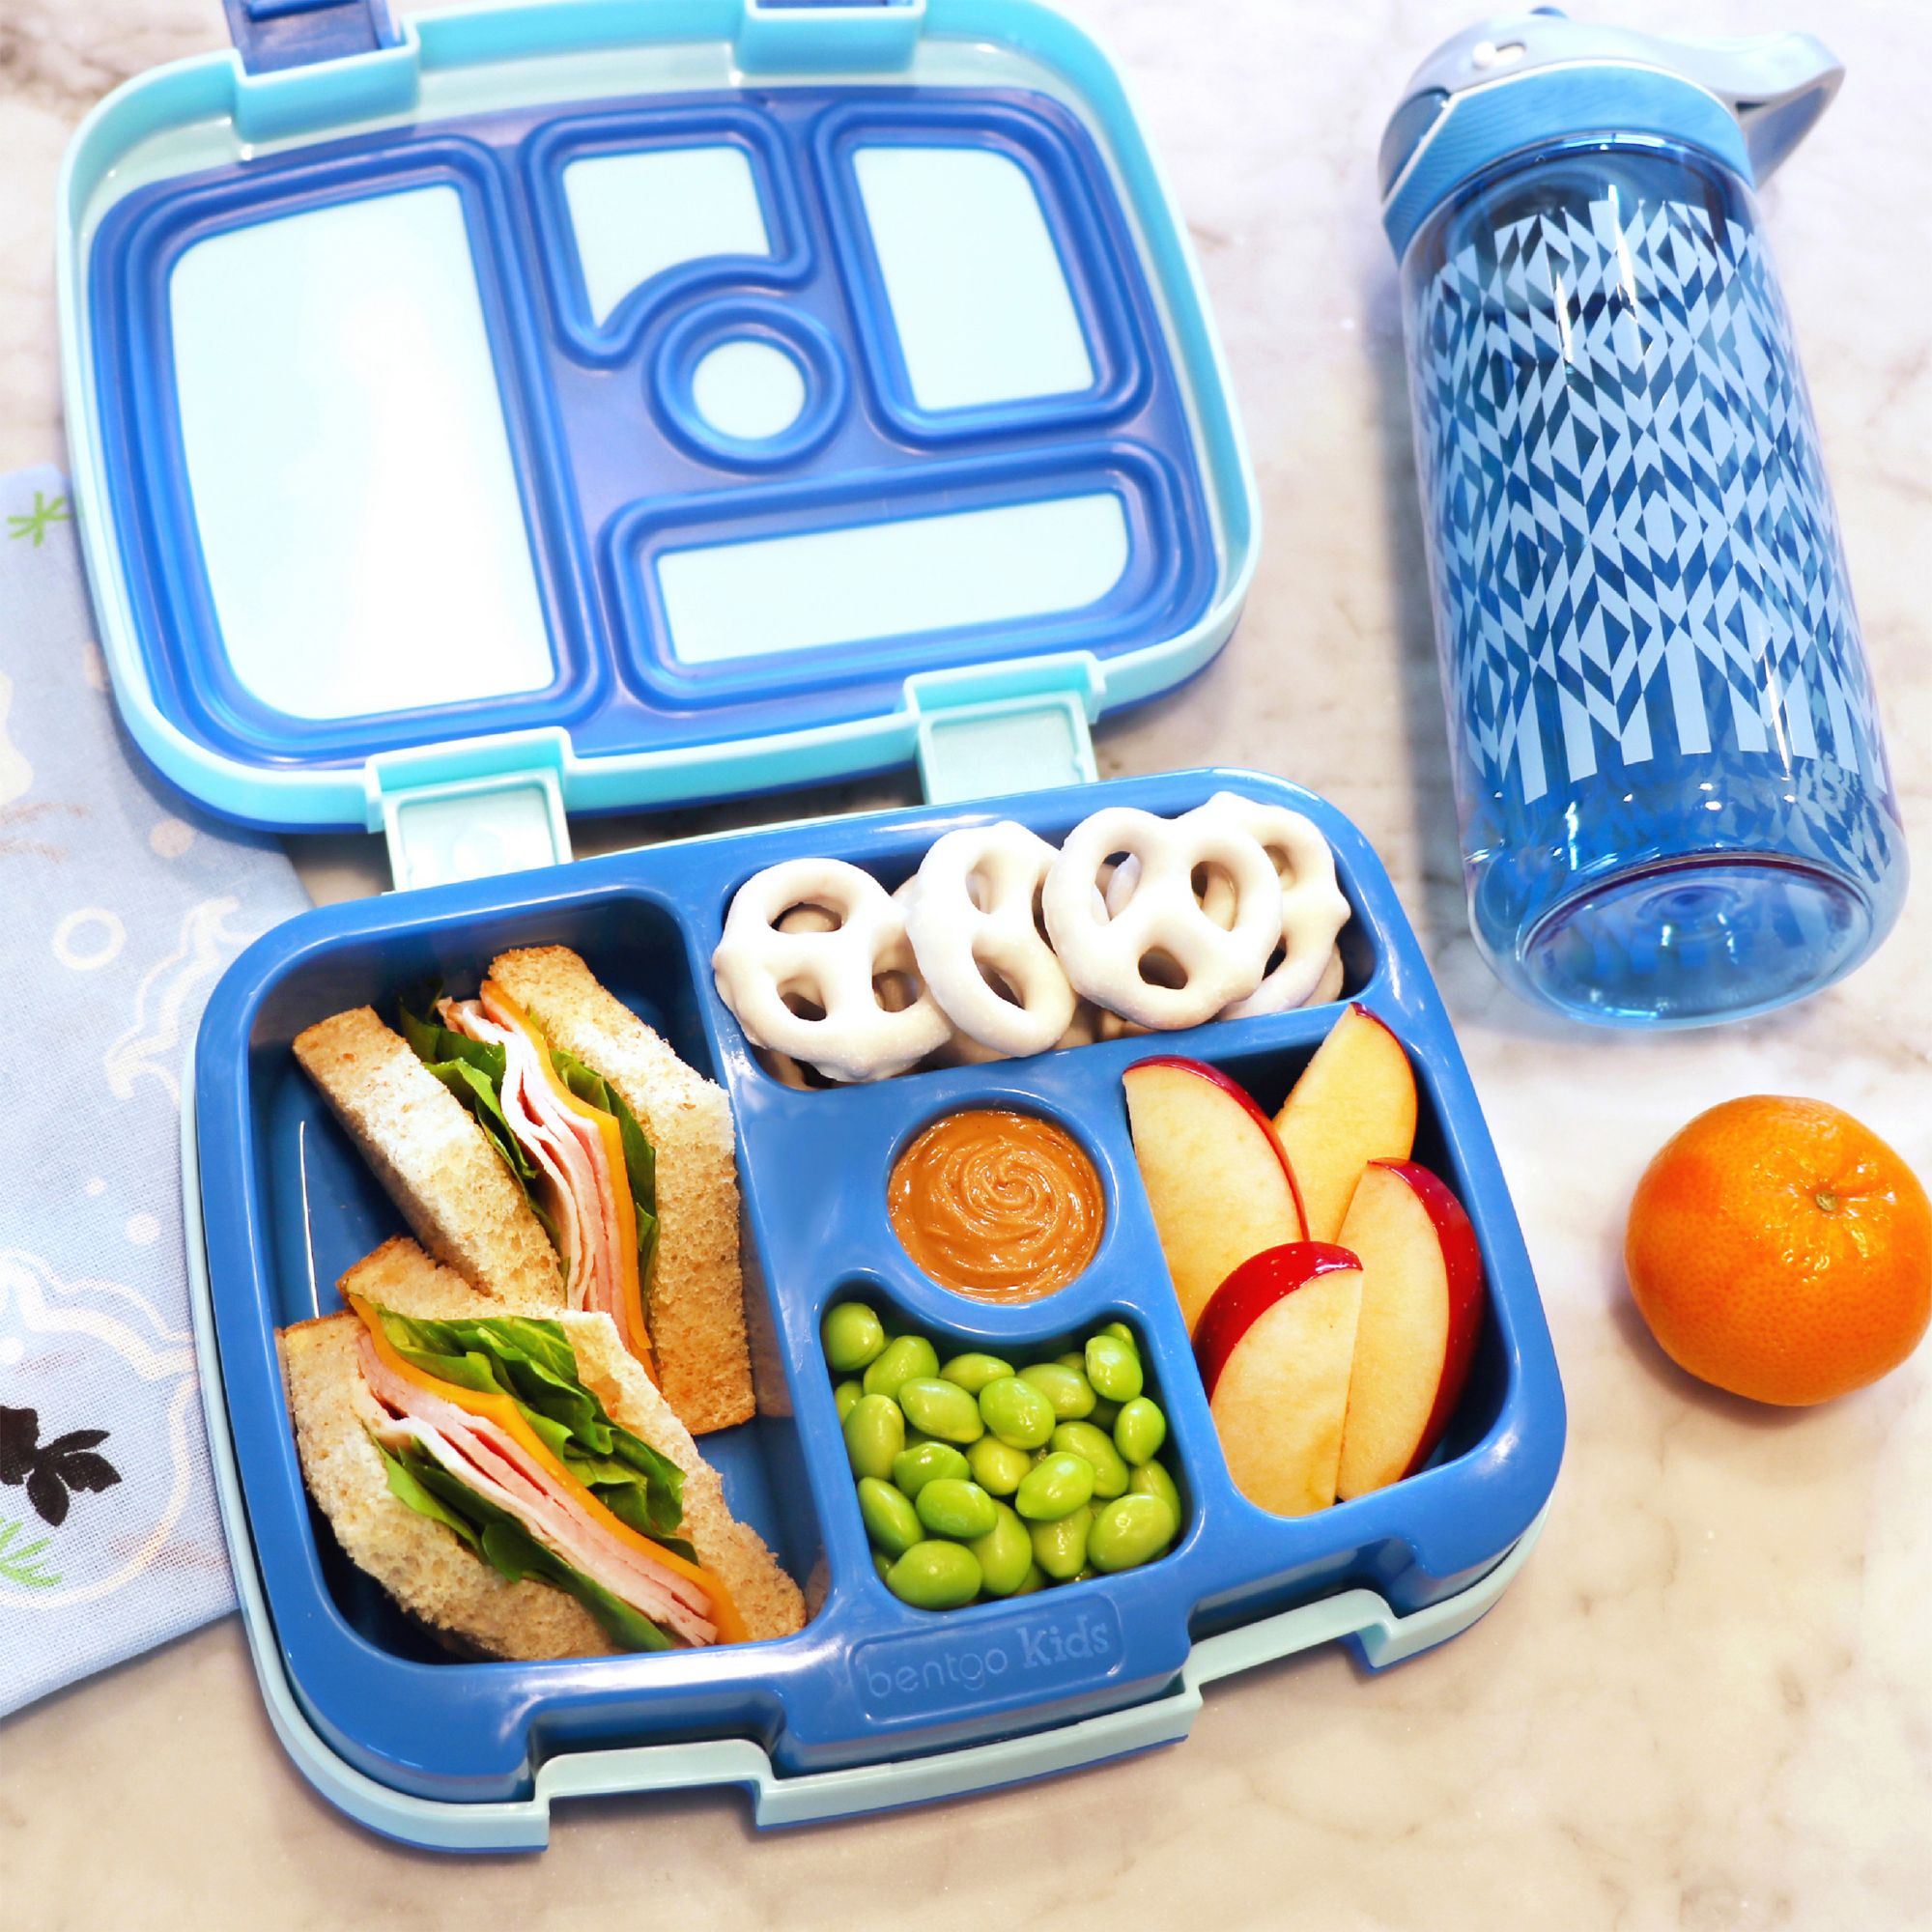 Bentgo Kids Durable & Leak Proof Children's Lunch Box - Orange, 1